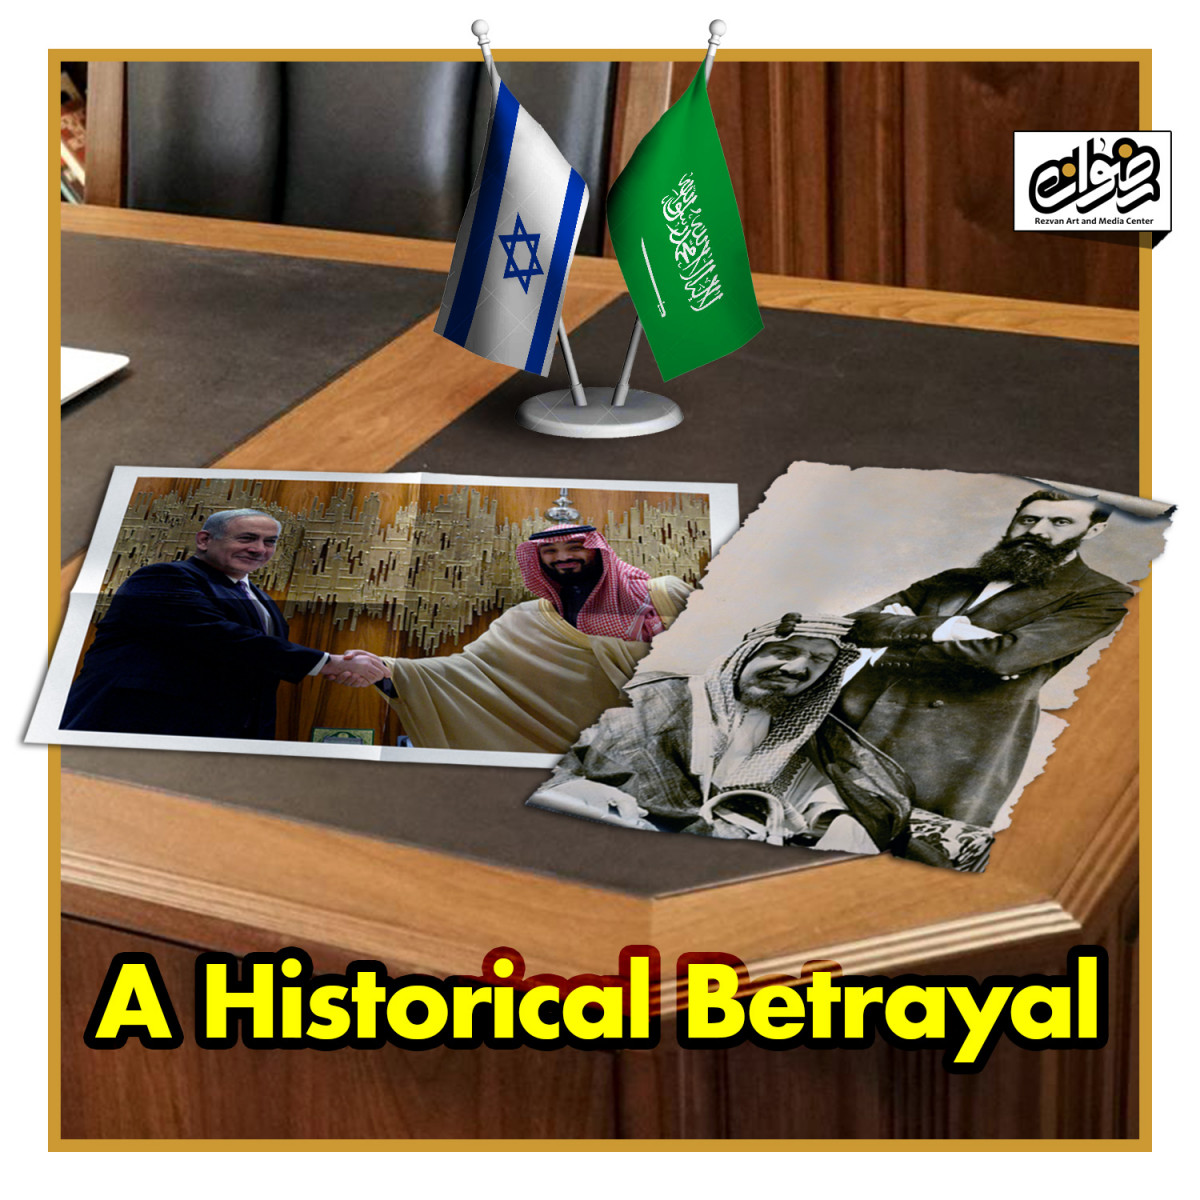 A historical betrayal